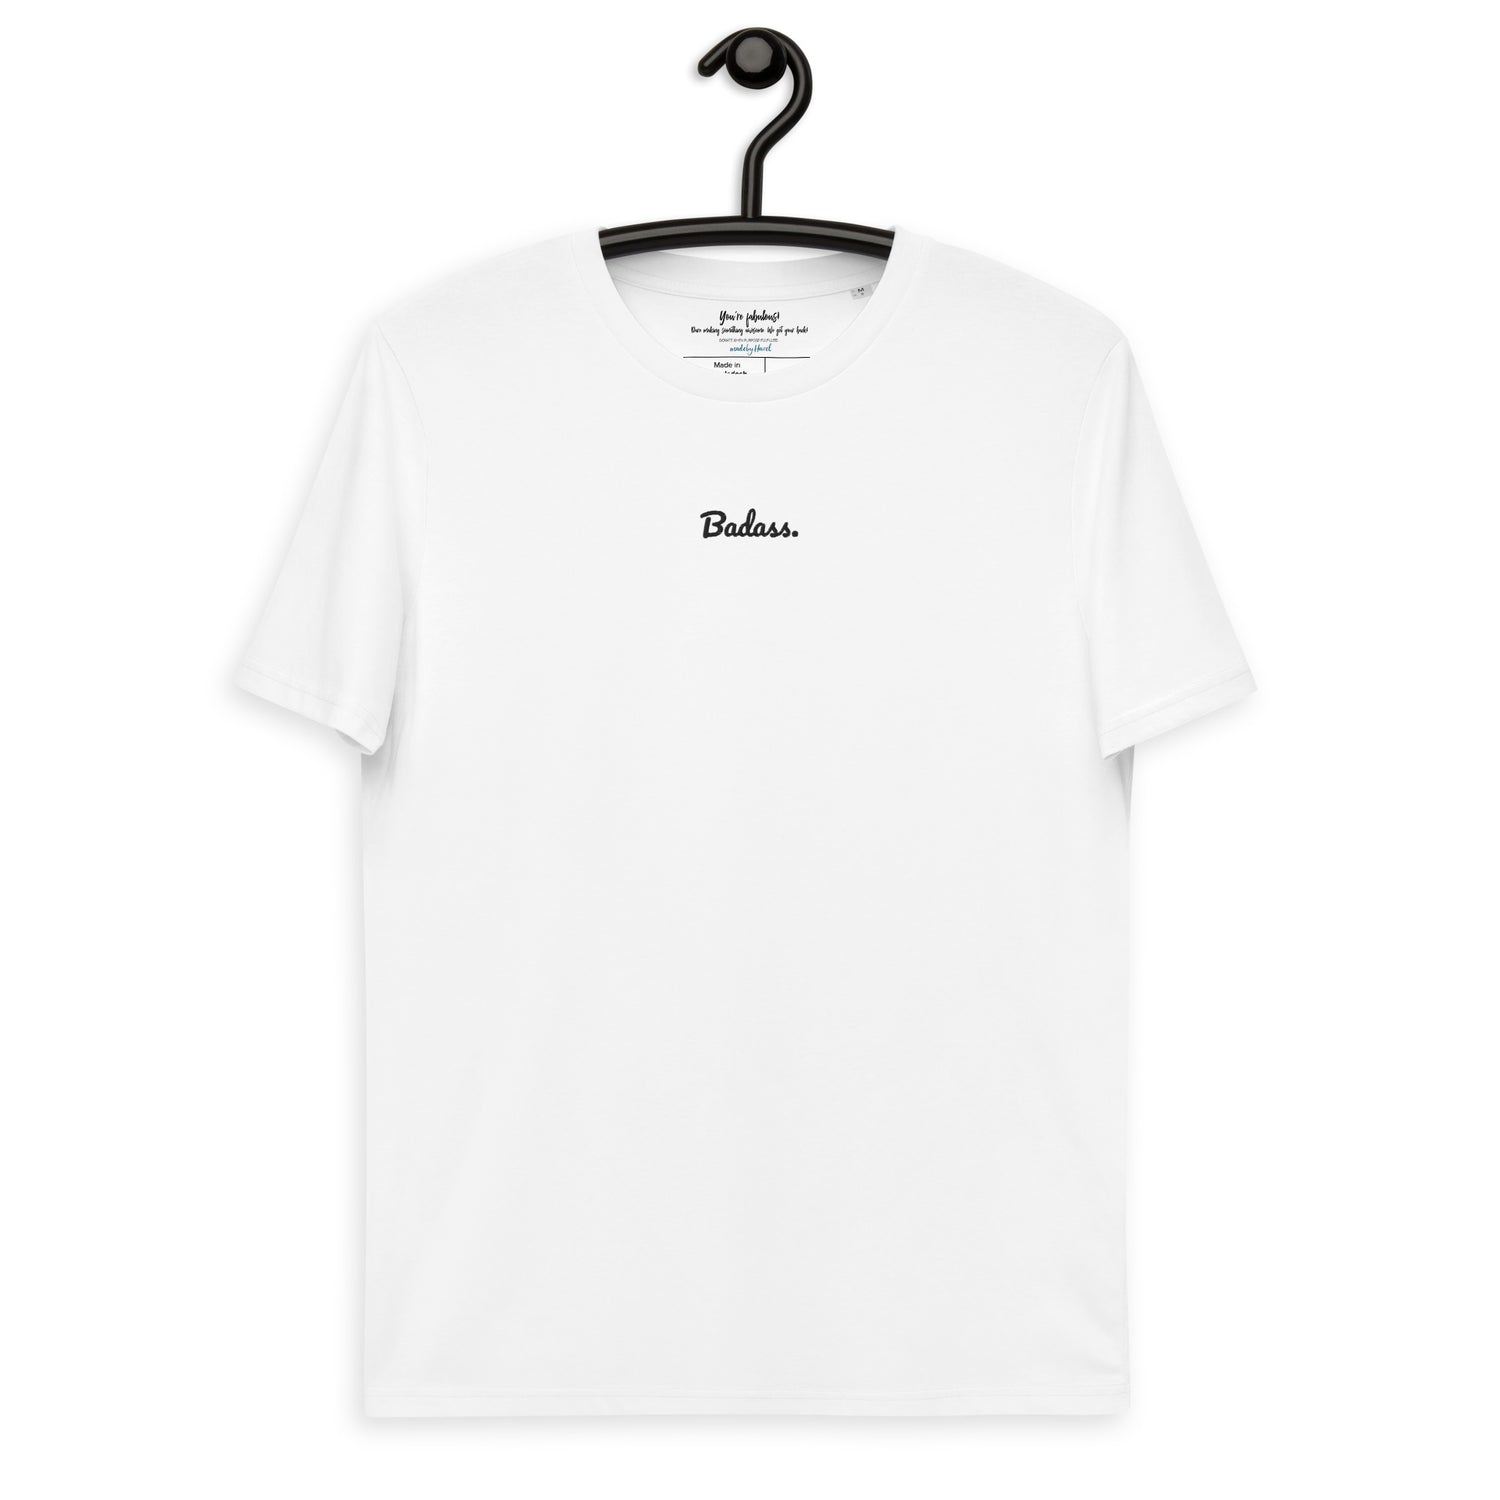 Badass  embroided  on a unisex organic  cotton T-shirt